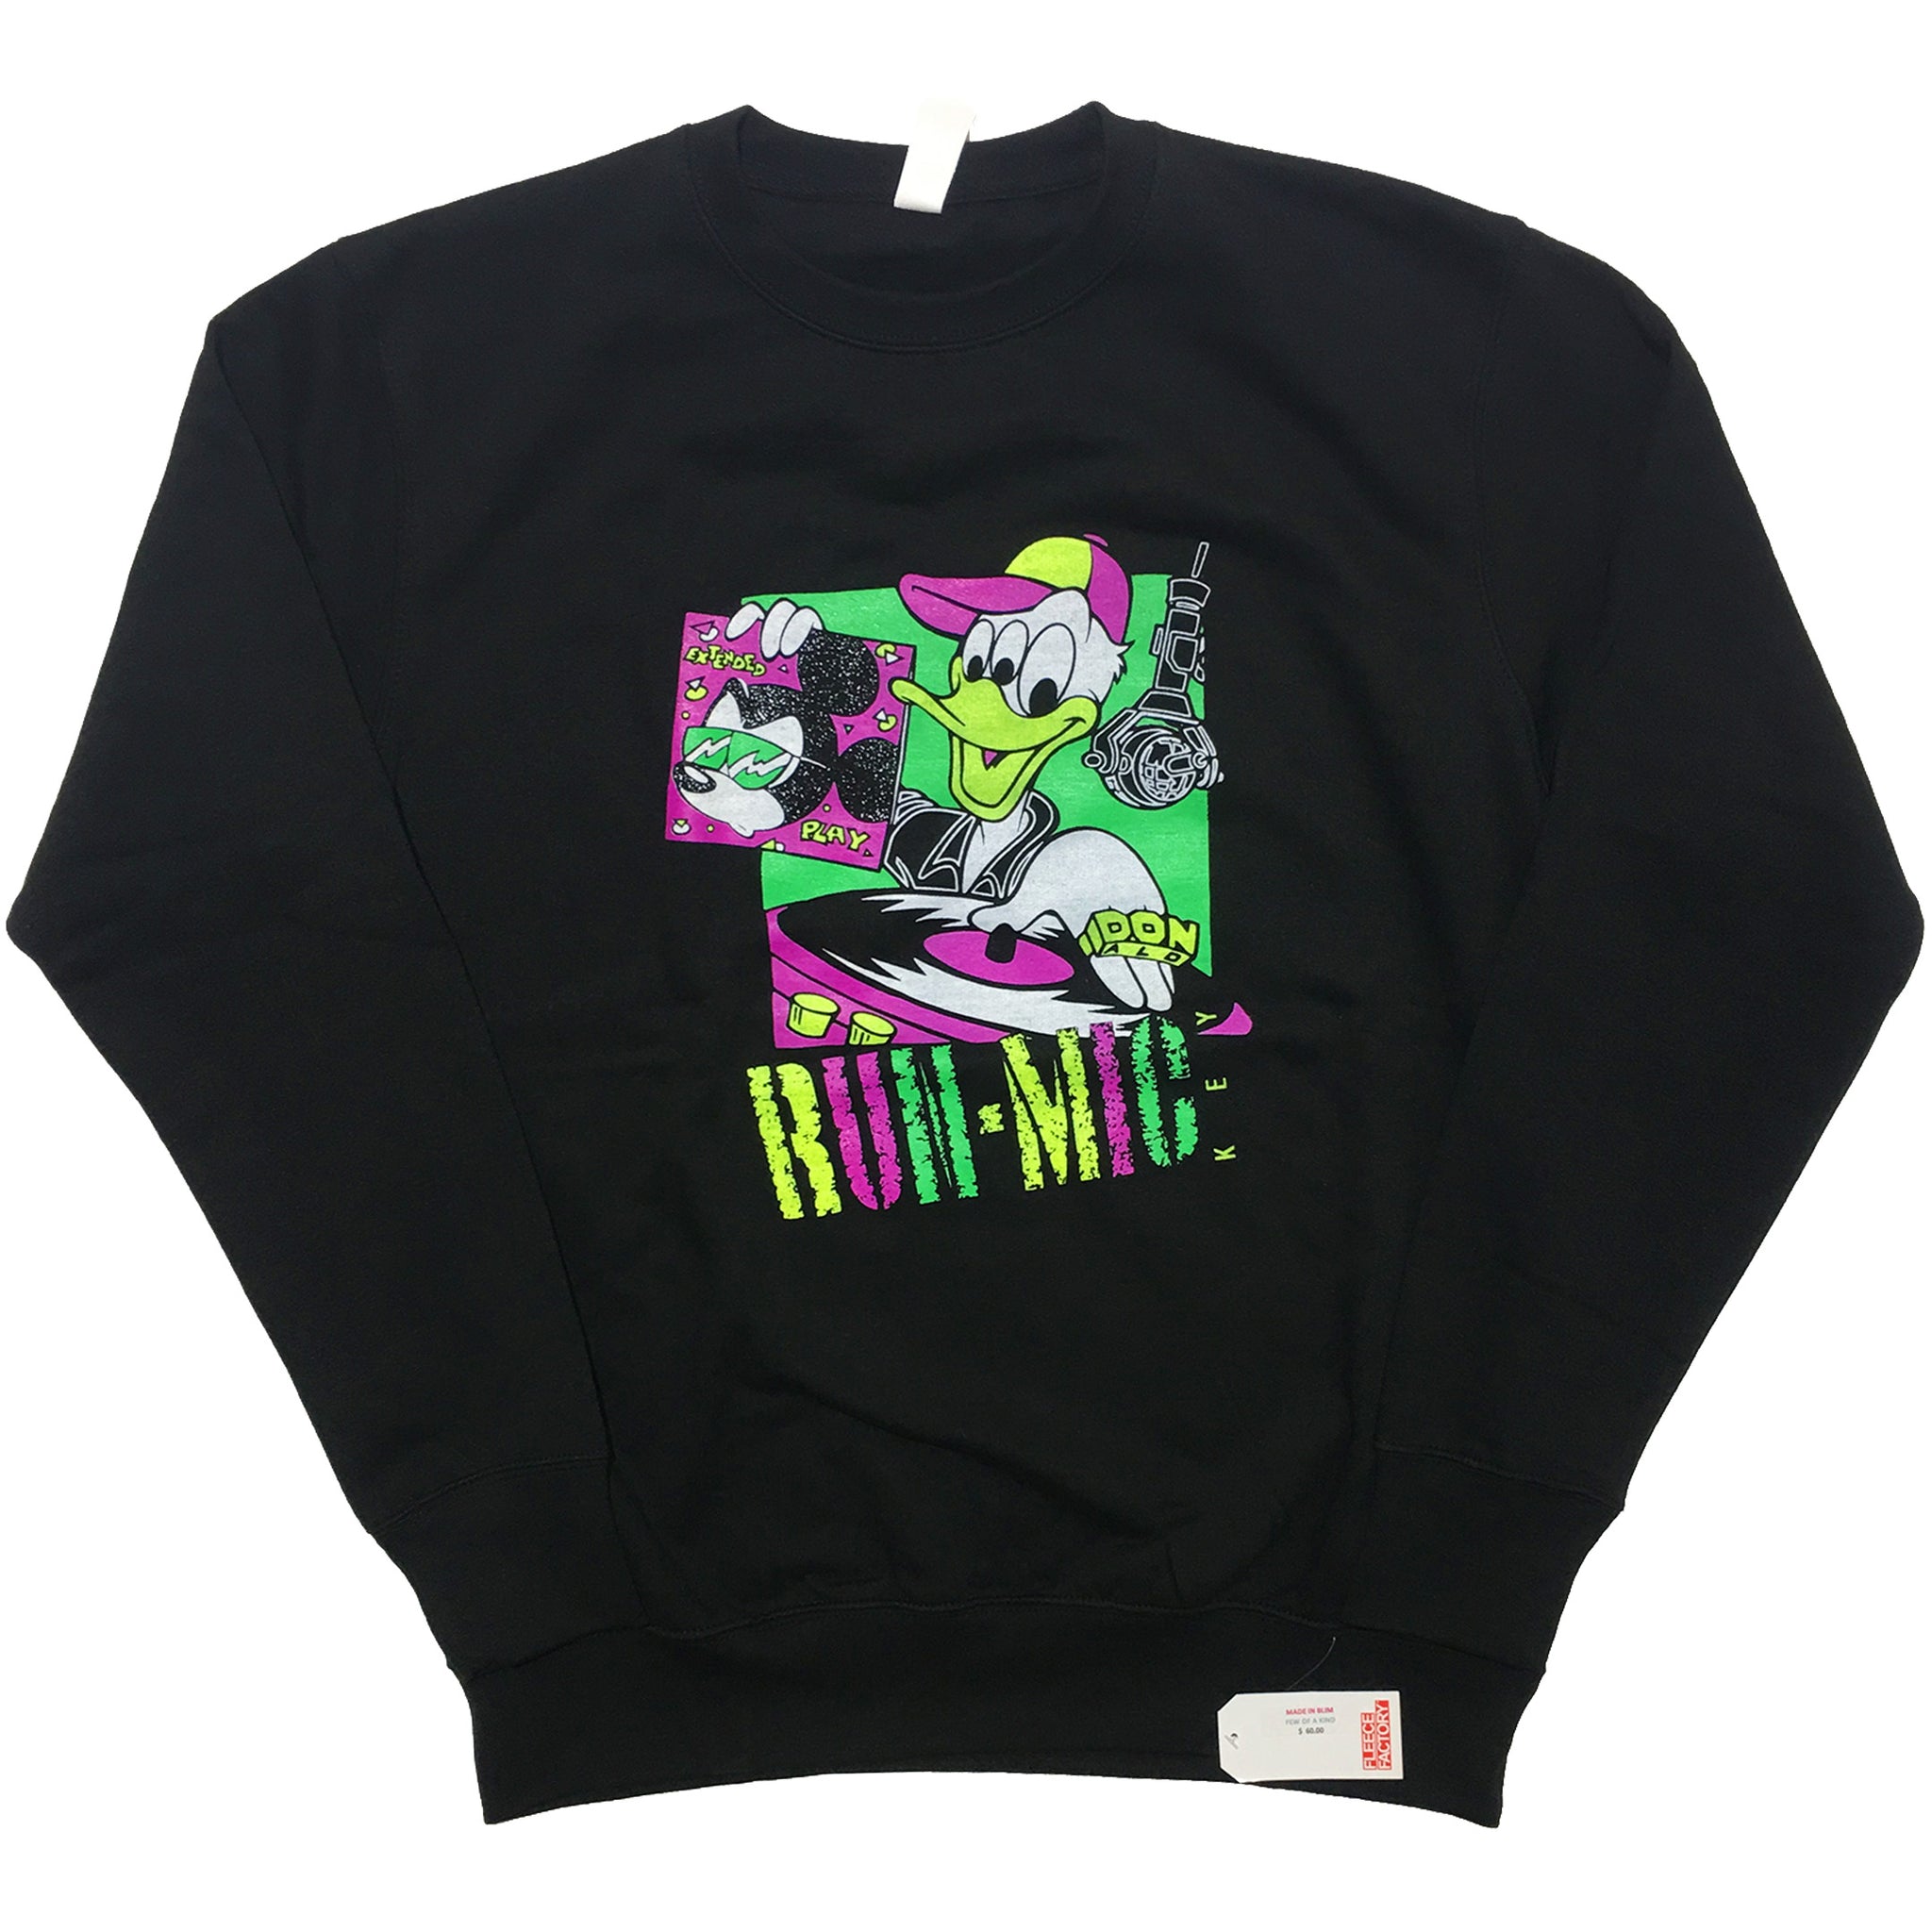 "Run MIC" Crew Sweater by FCK DIZNEE for Blim